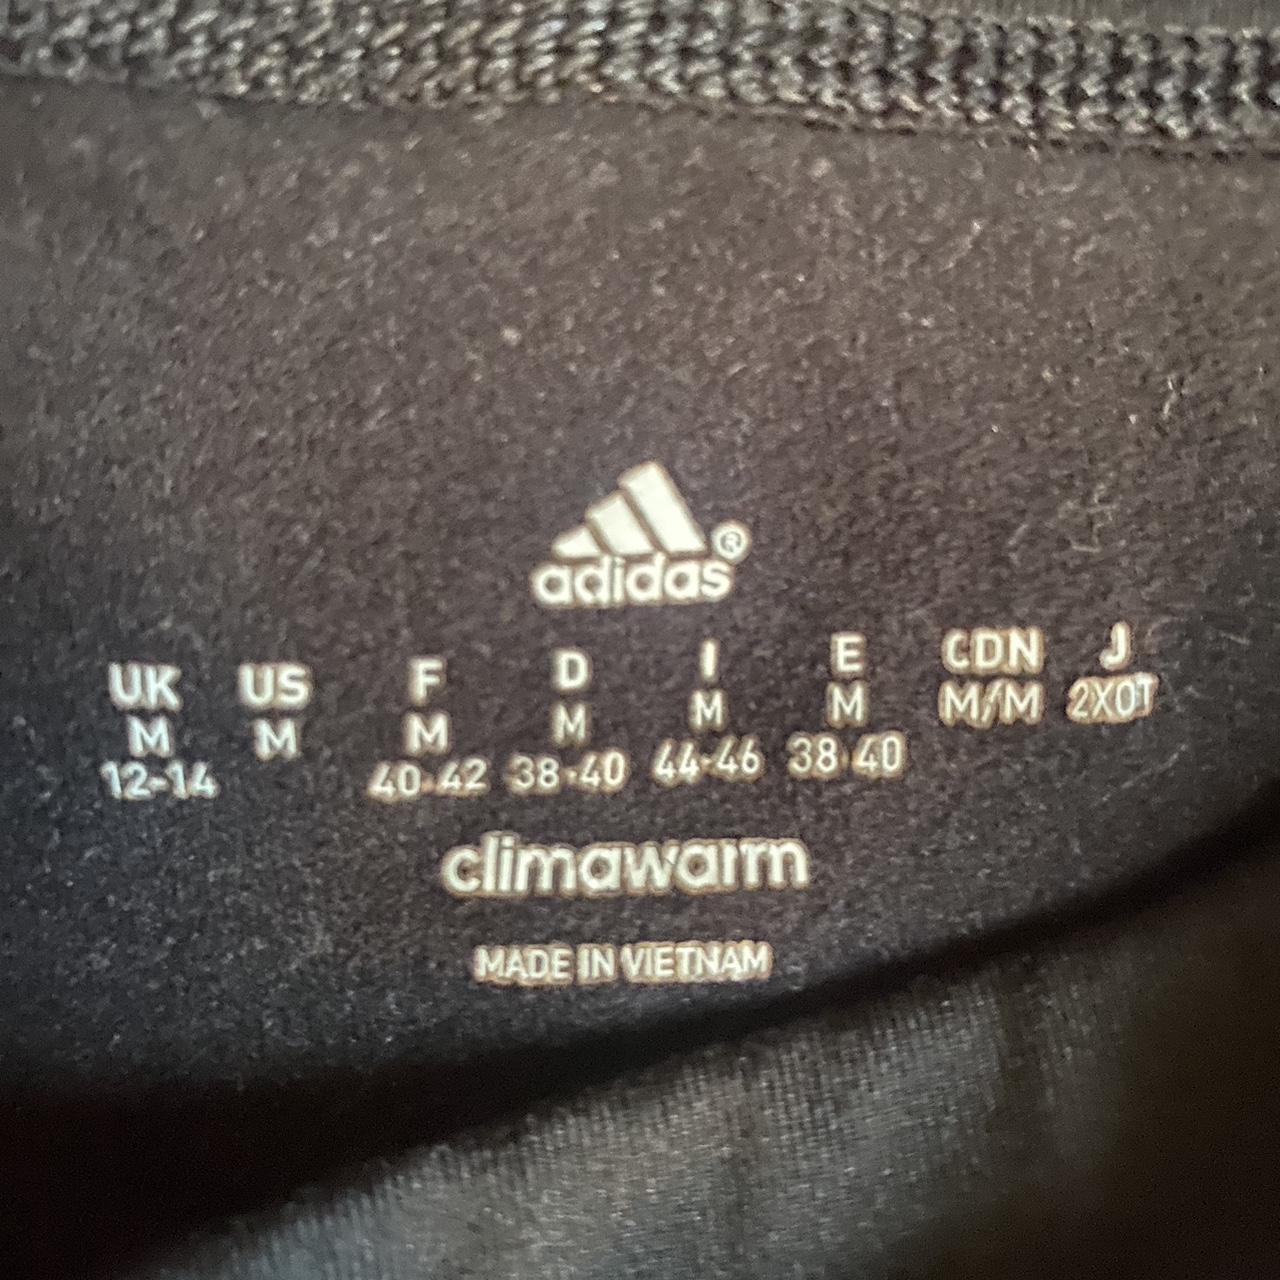 Adidas climawarm leggings Size M Good condition - Depop